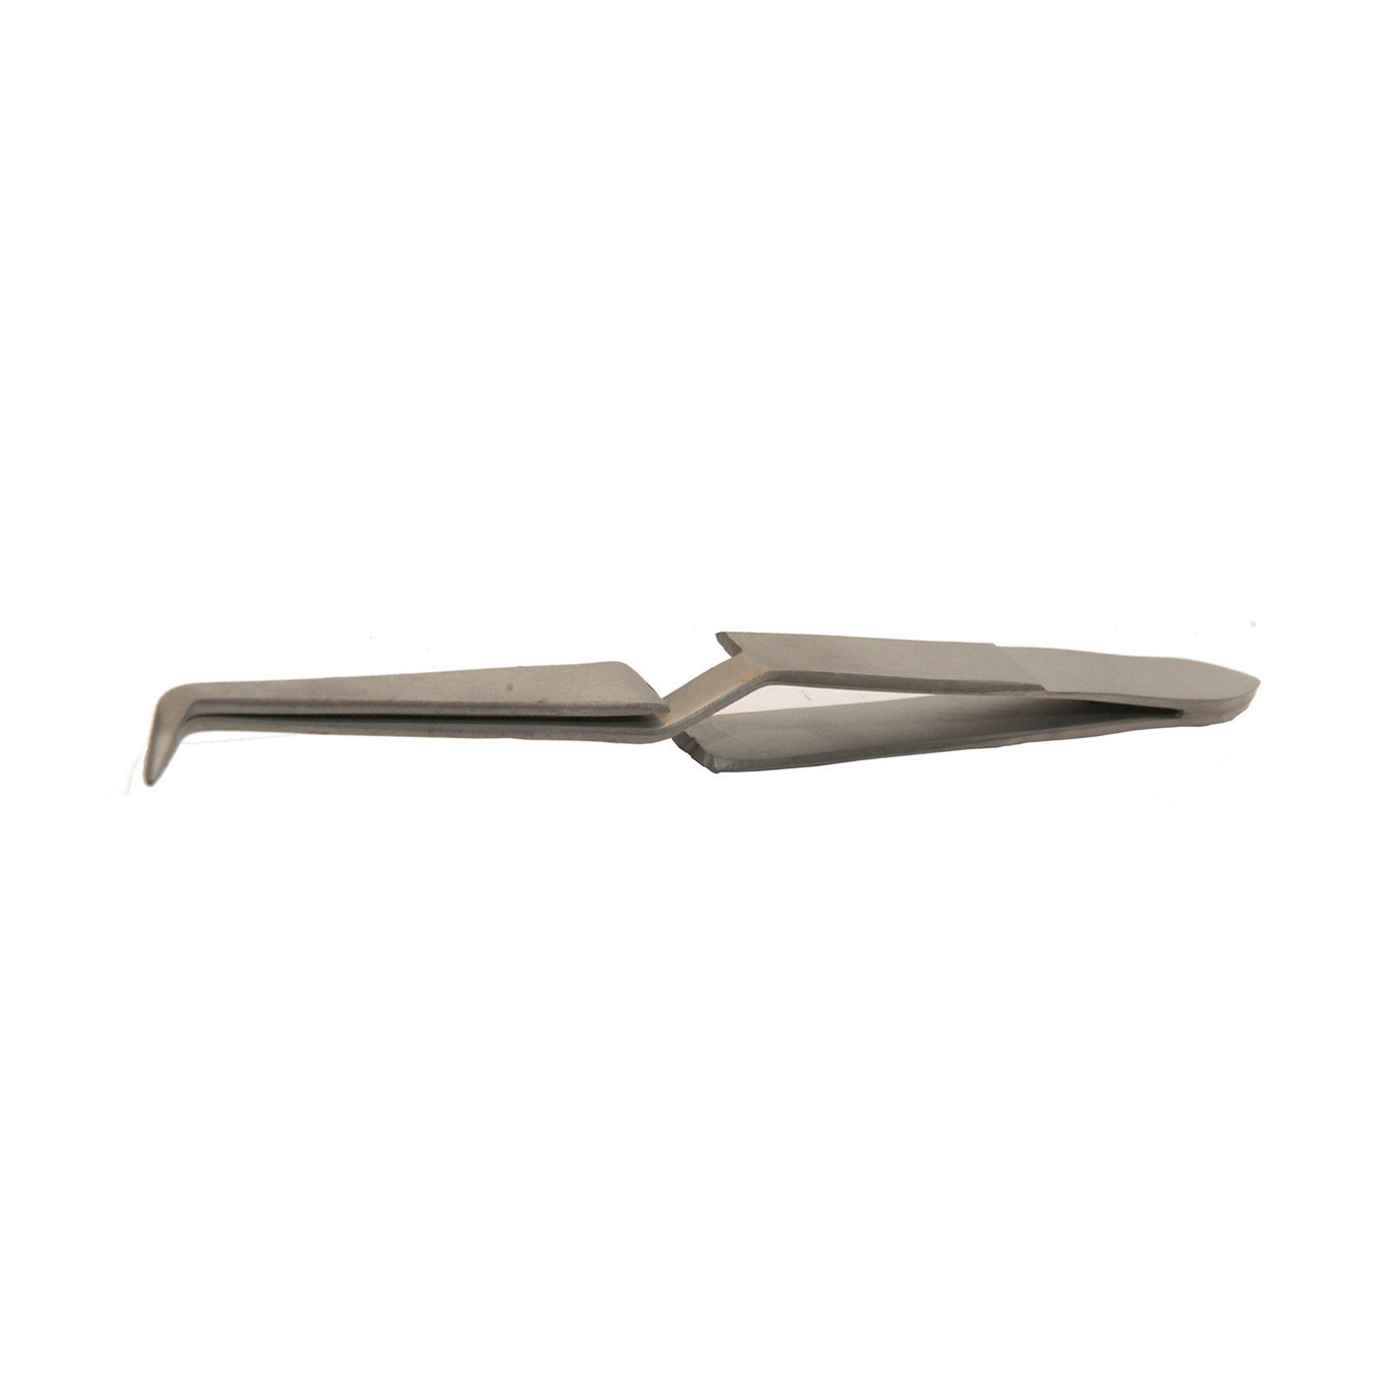 Lötkreuzpinzette, aus Titan, 165 mm, angewinkelt - 1 Stück